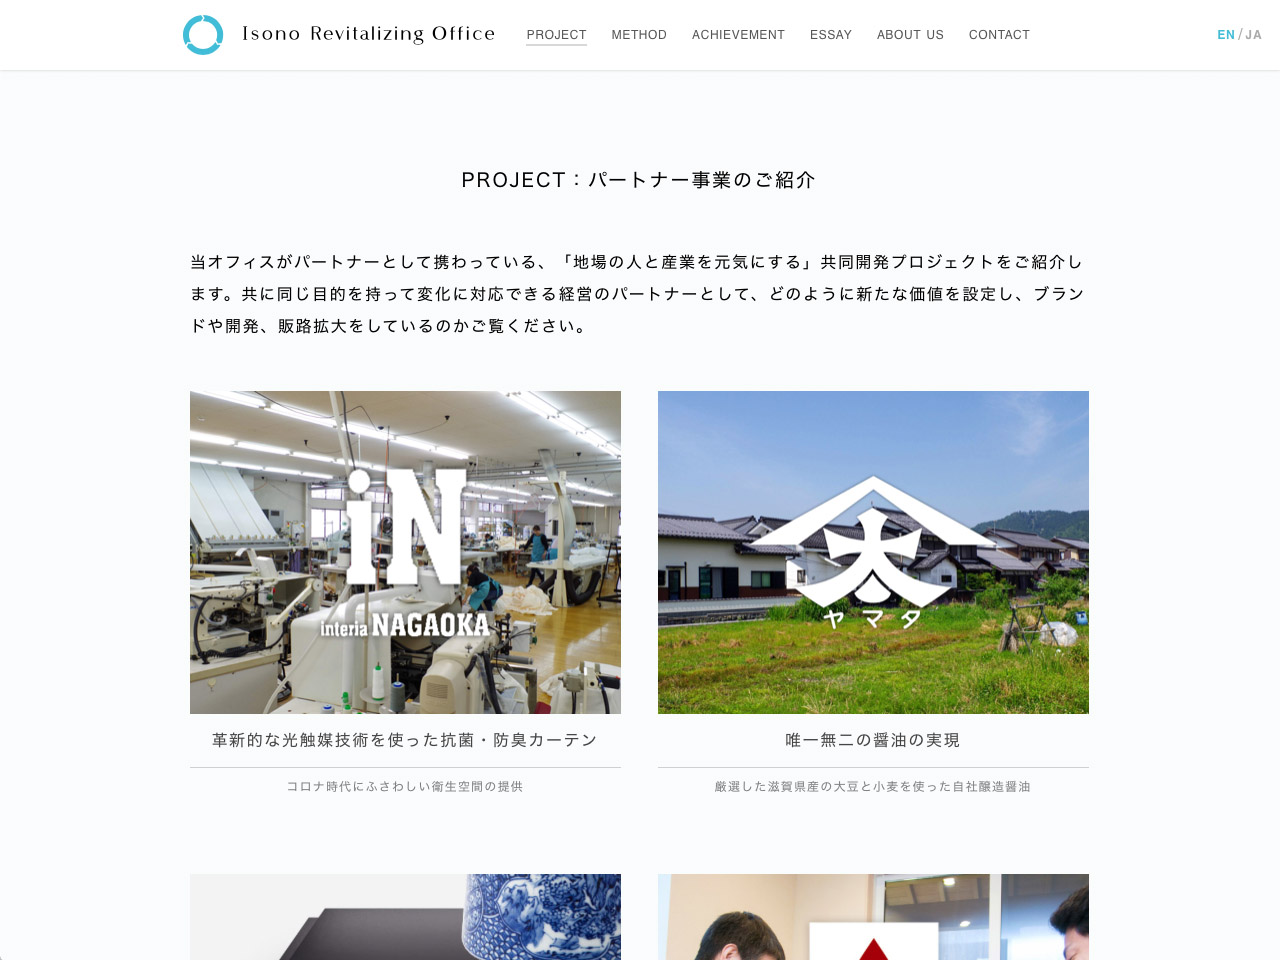 Isono Revitalizing Office website